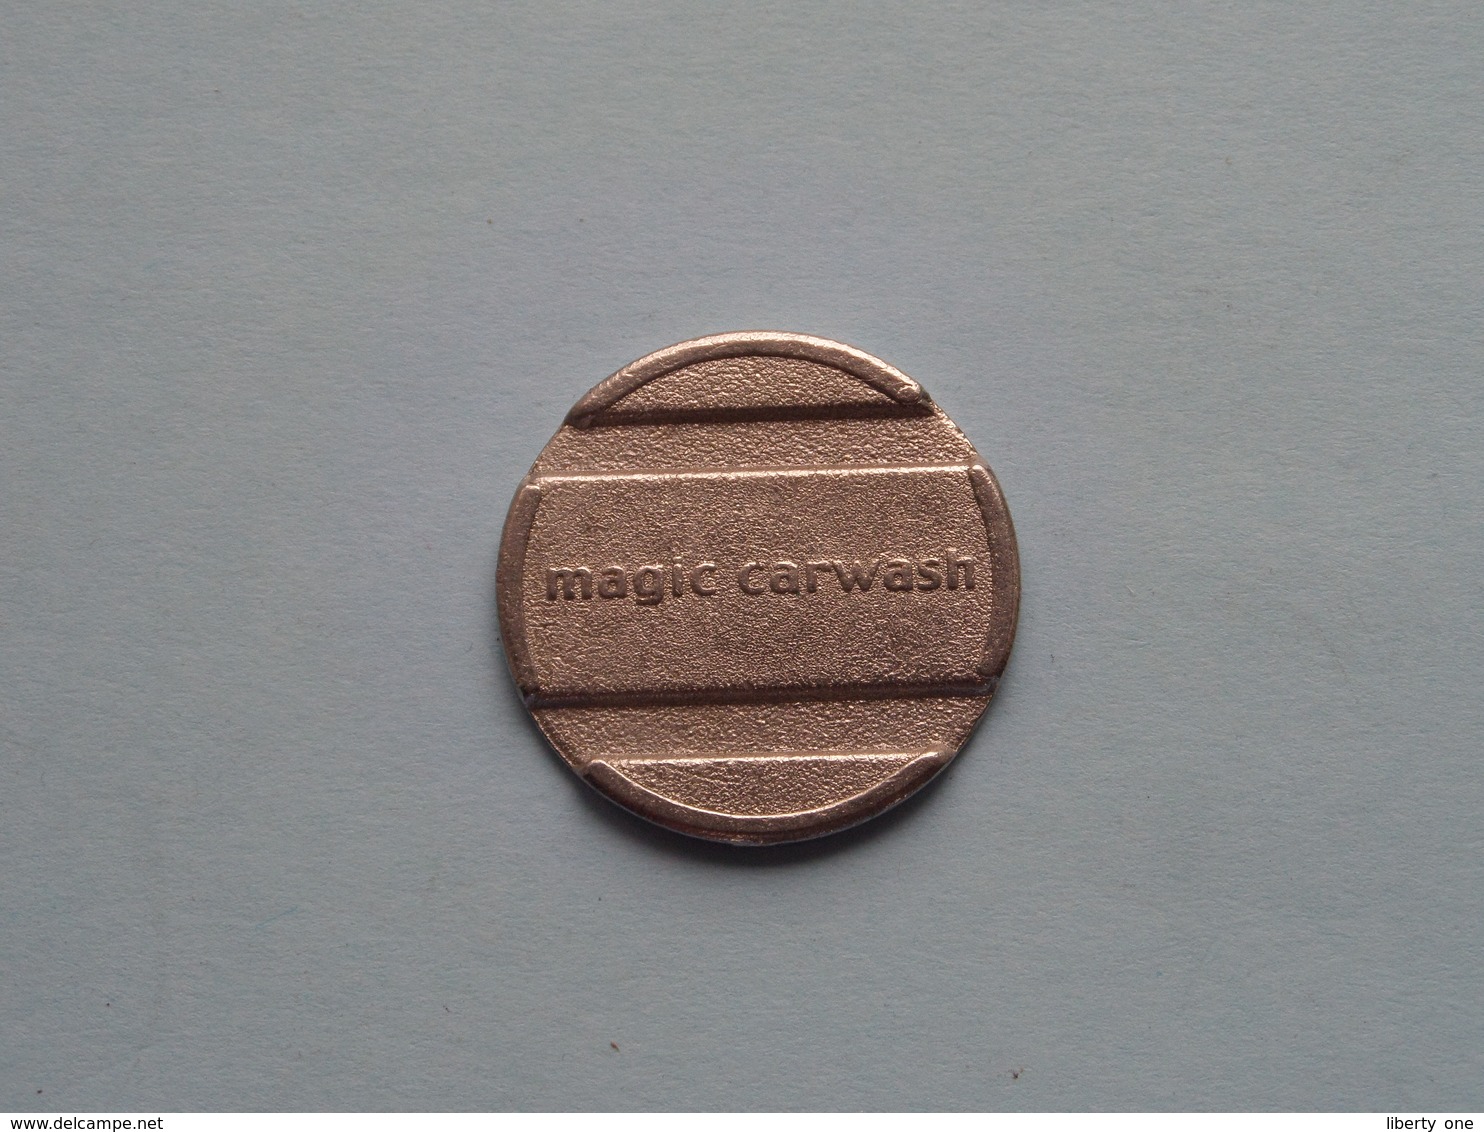 MAGIC CARWASH - 28 Mm. / 5.5 Gram ( Uncleaned ) ! - Gewerbliche